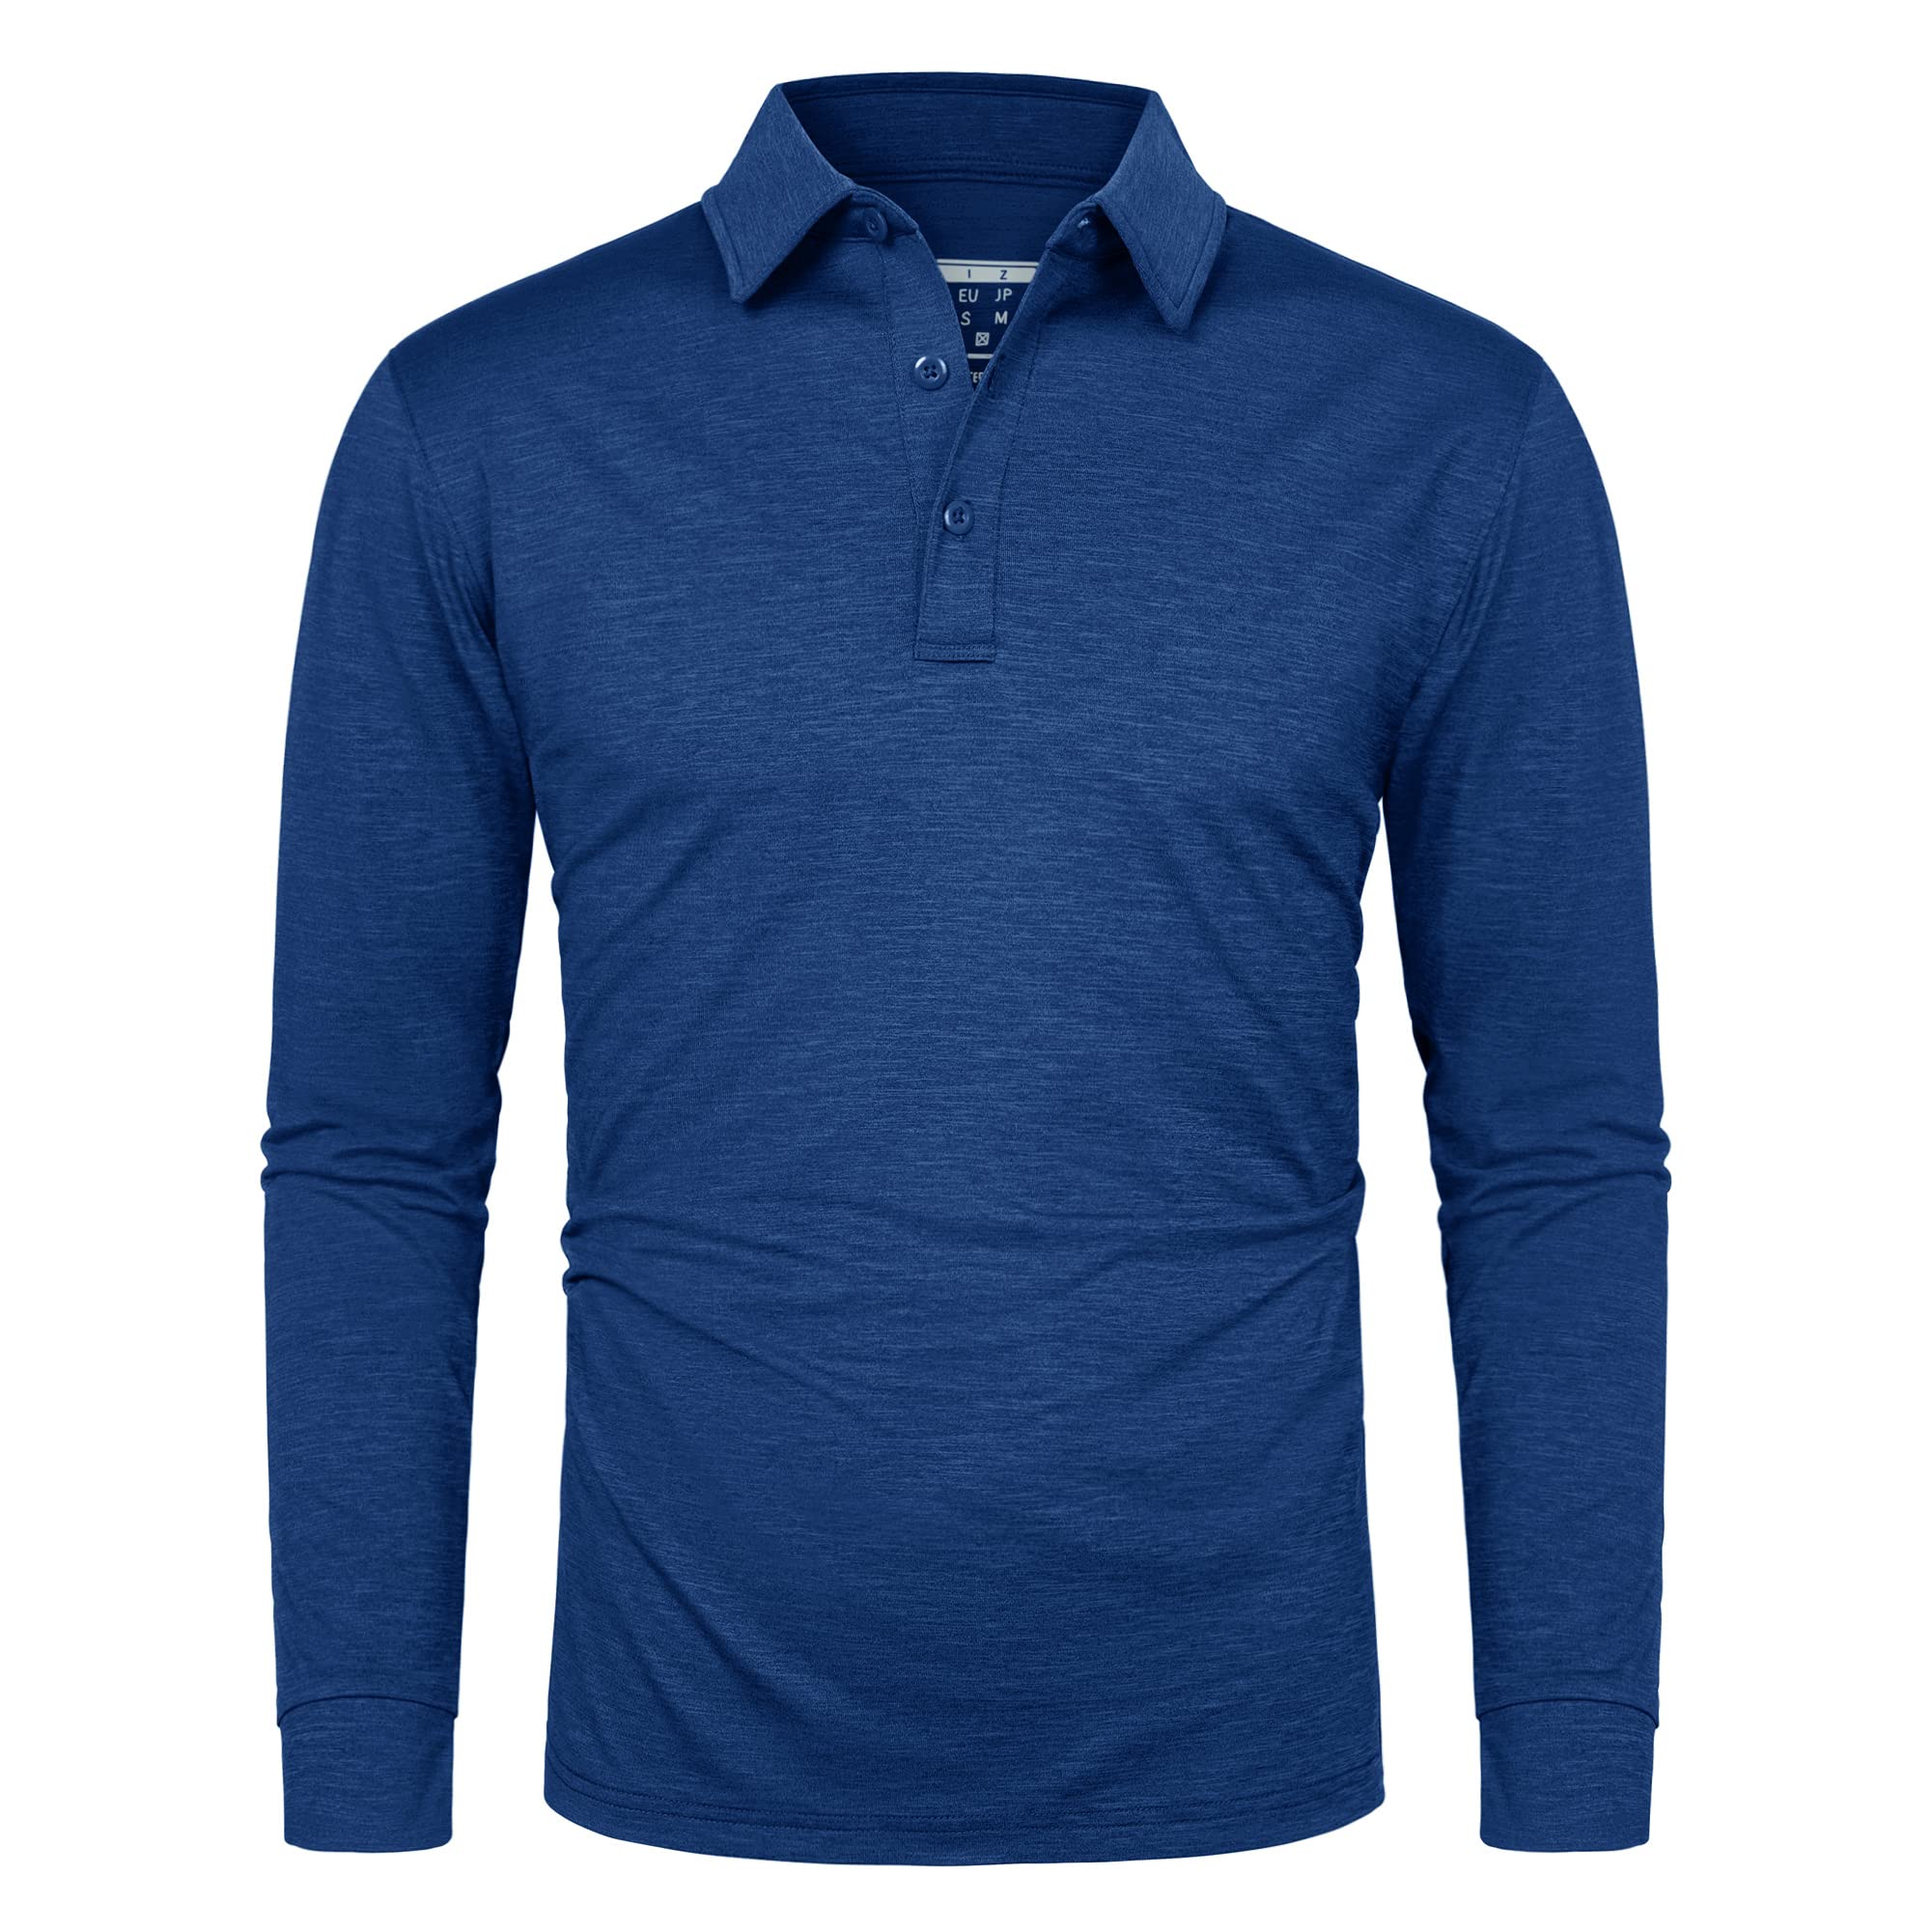 Soft Polyester Golf Polo Long Sleeve Shirt in dark blue